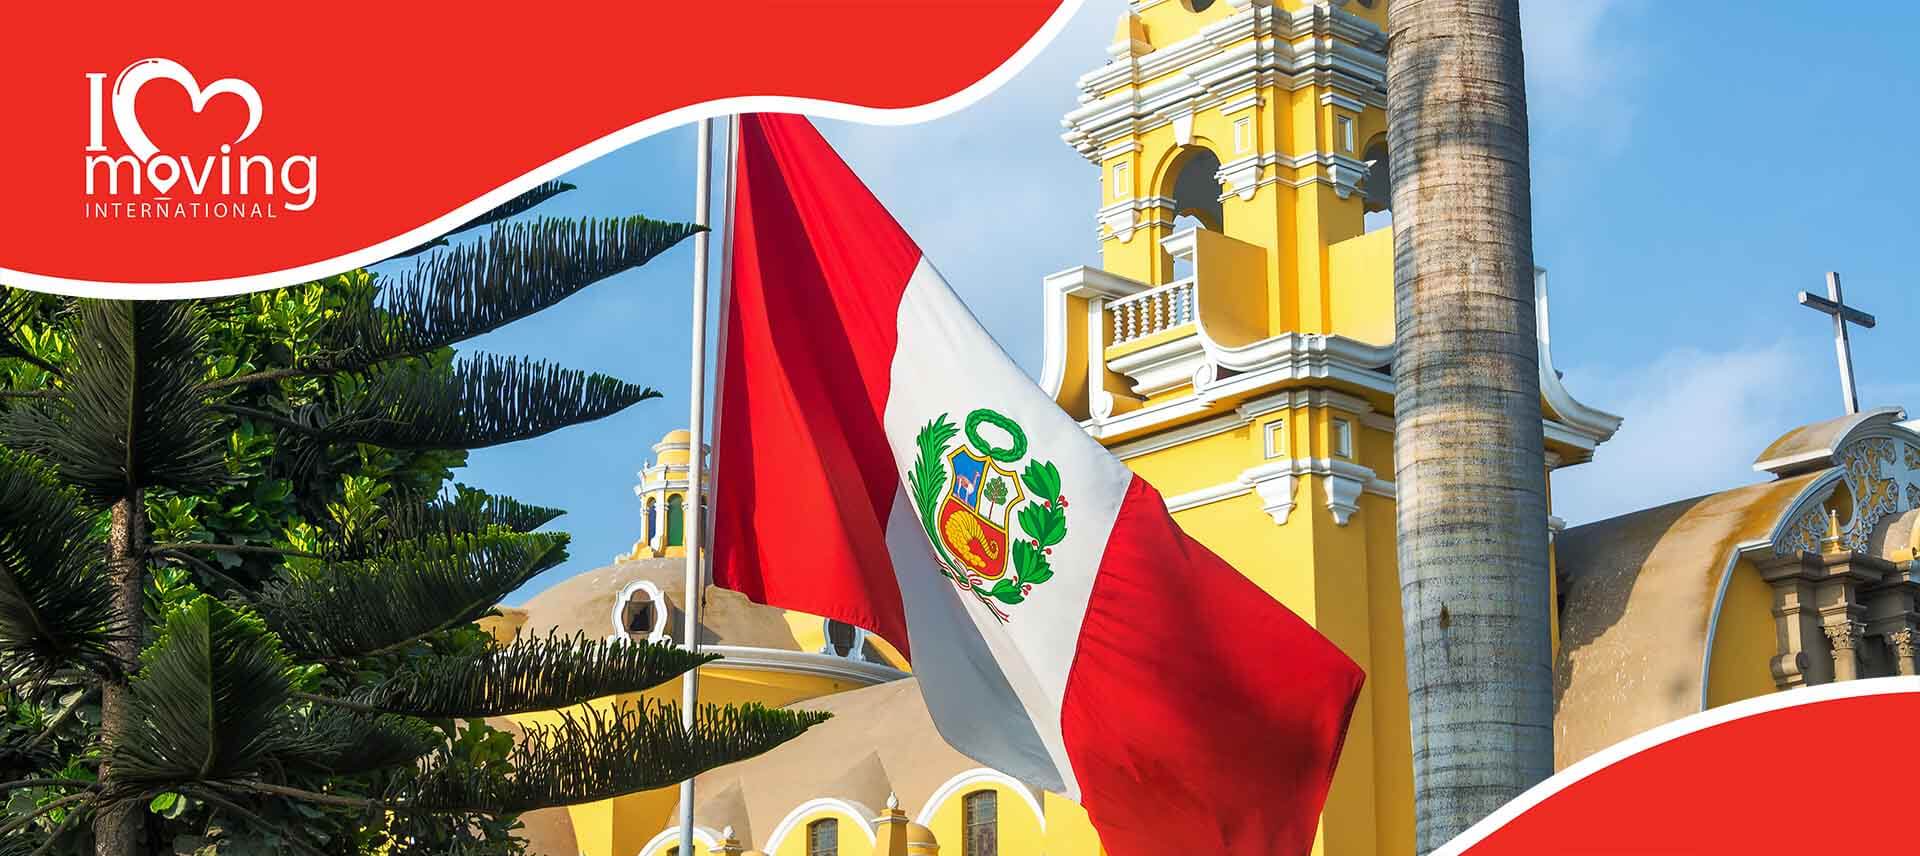 Peruvian flag I love international Moving logo